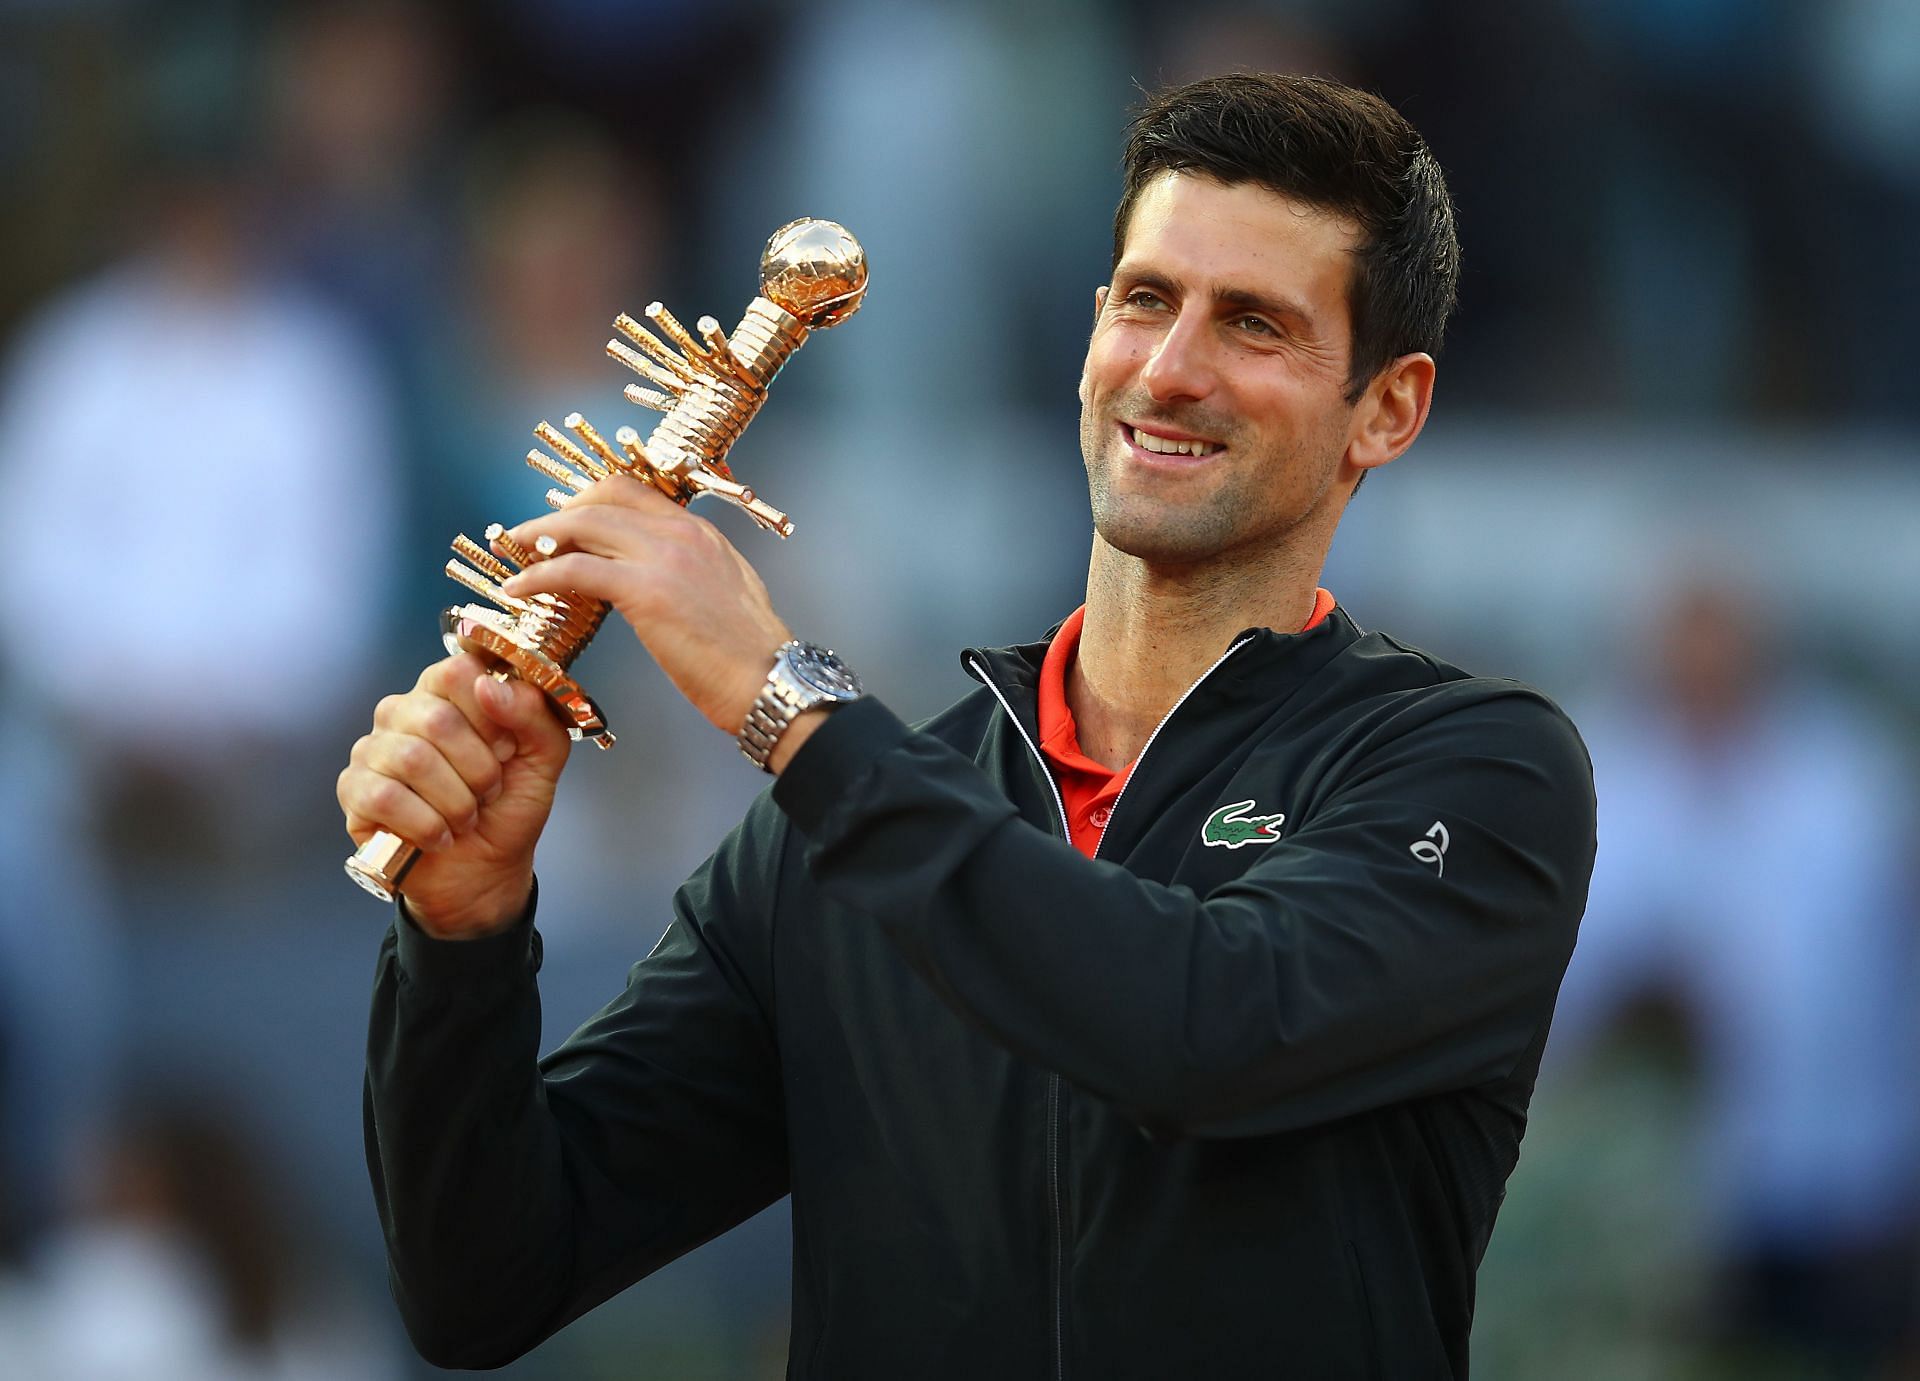 Novak Djokovic with the Madrid Open trophy